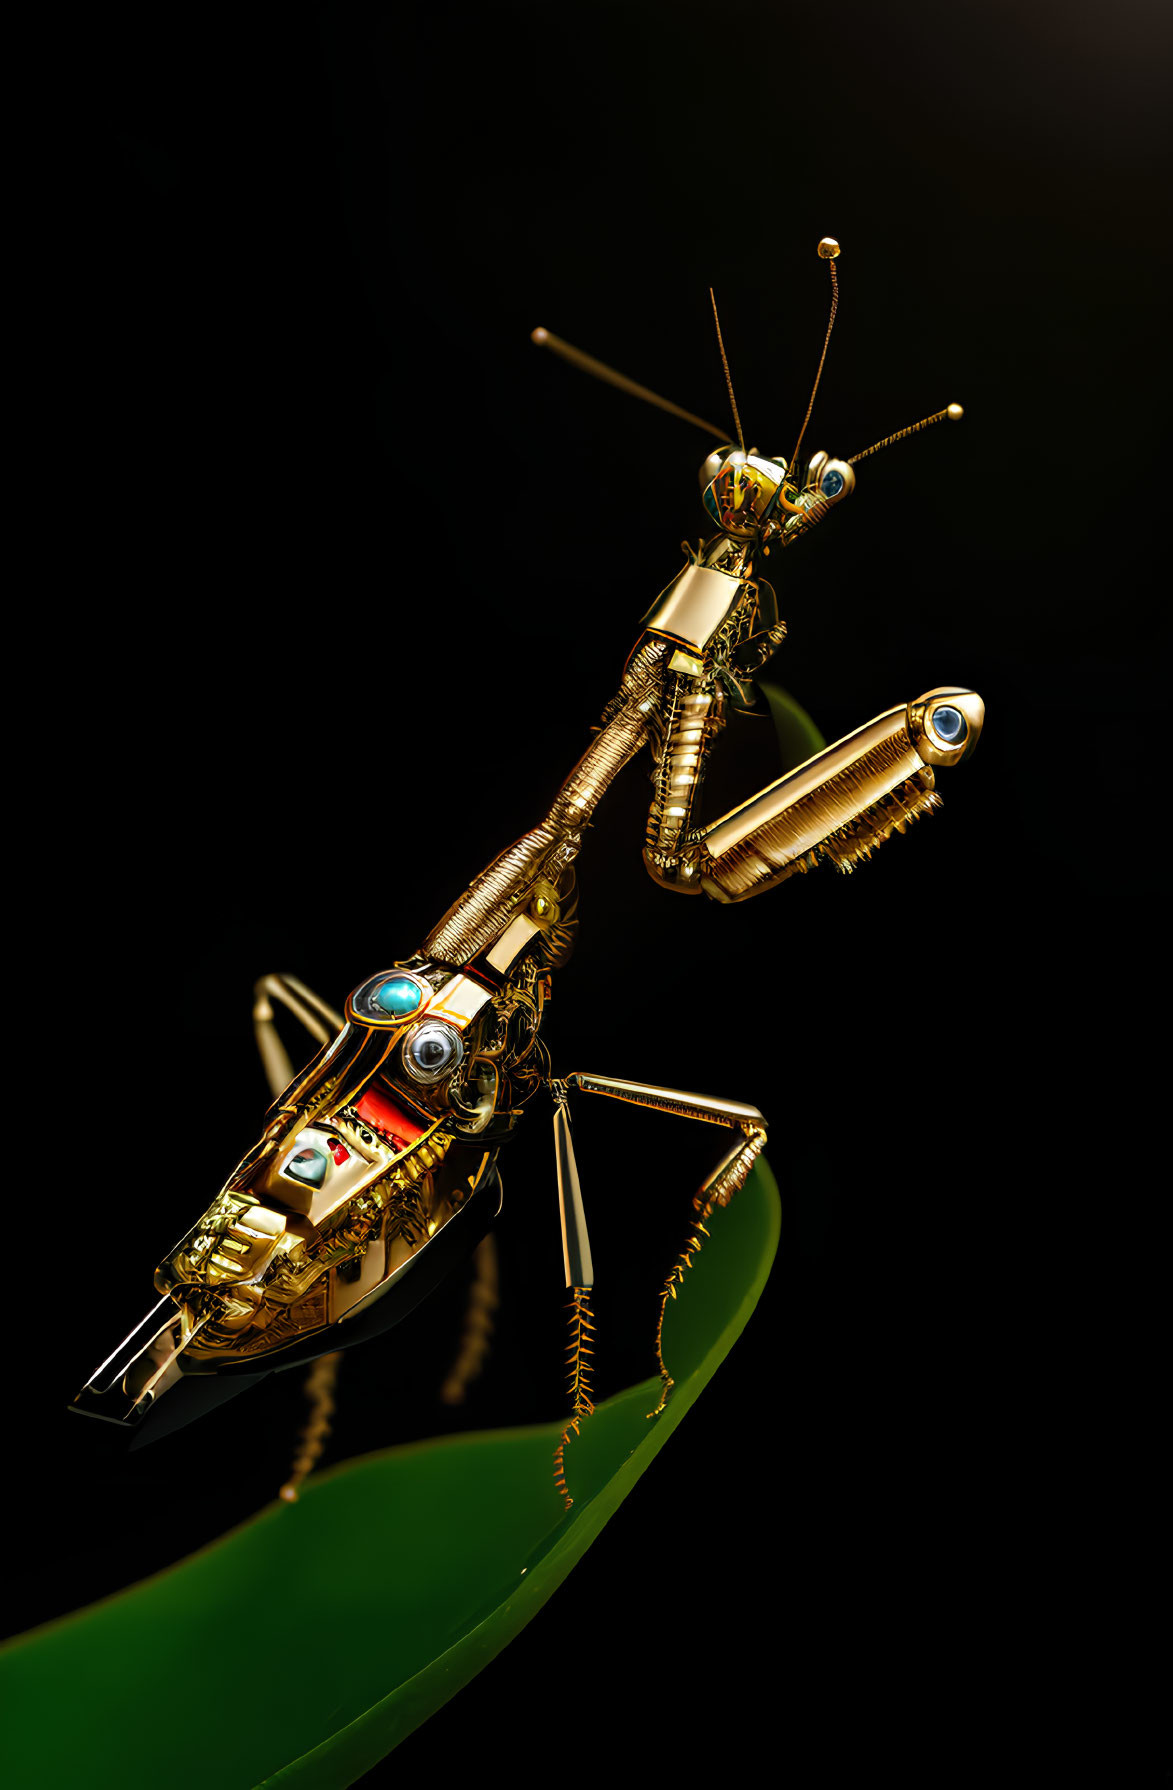 Metallic mechanical praying mantis on green leaf against black background